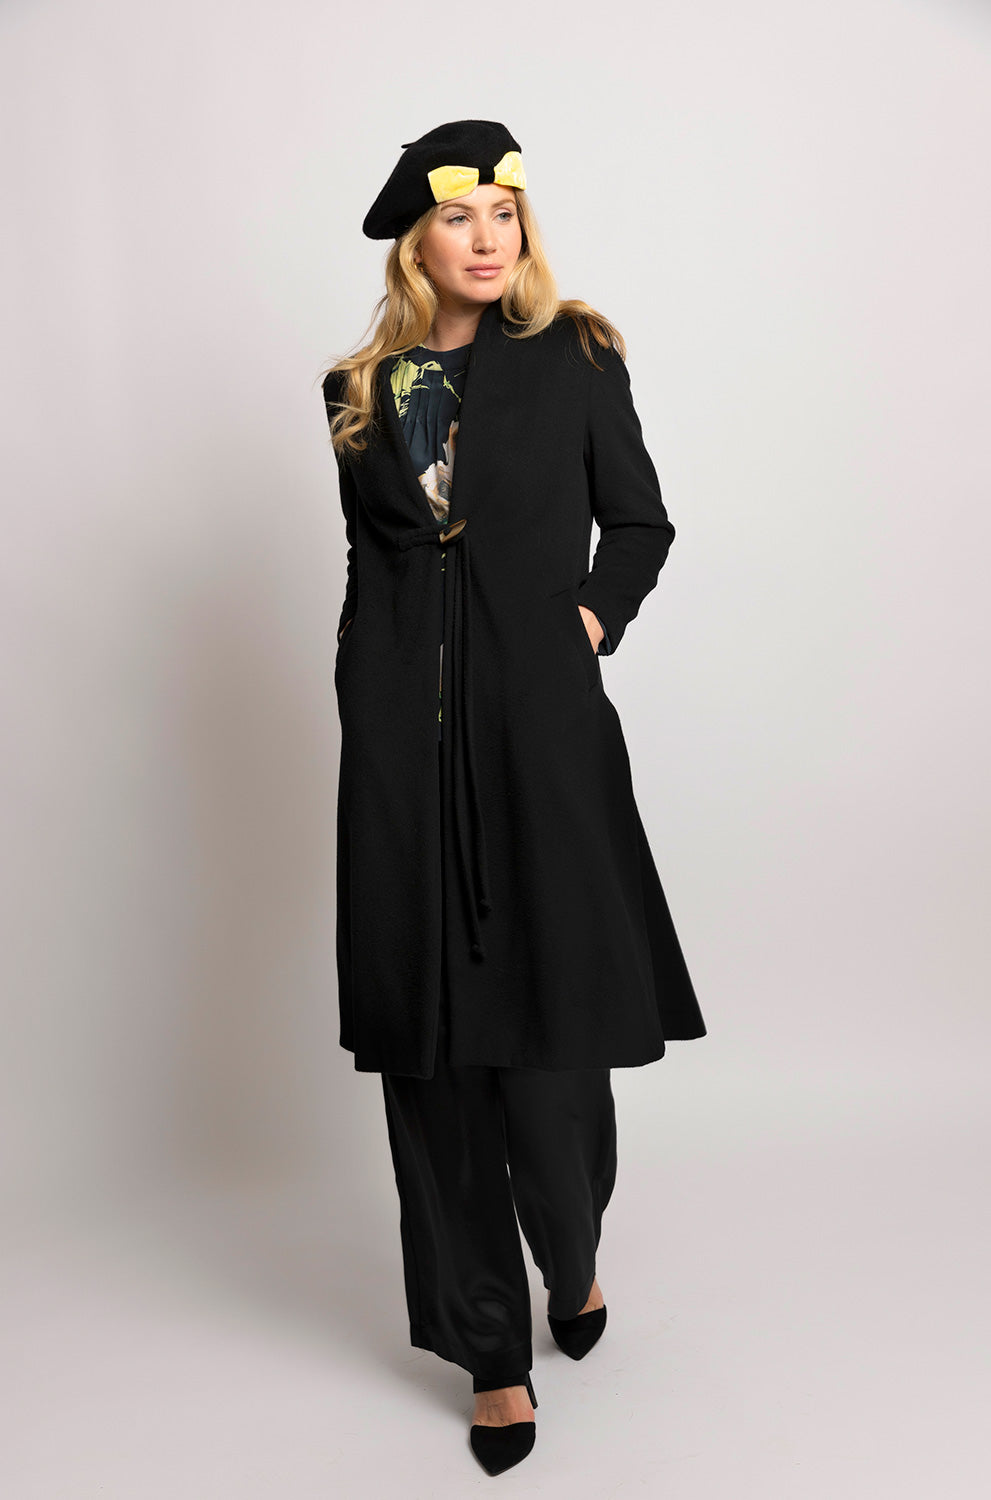 Jamilah Black Cashmere Coat - Made to order